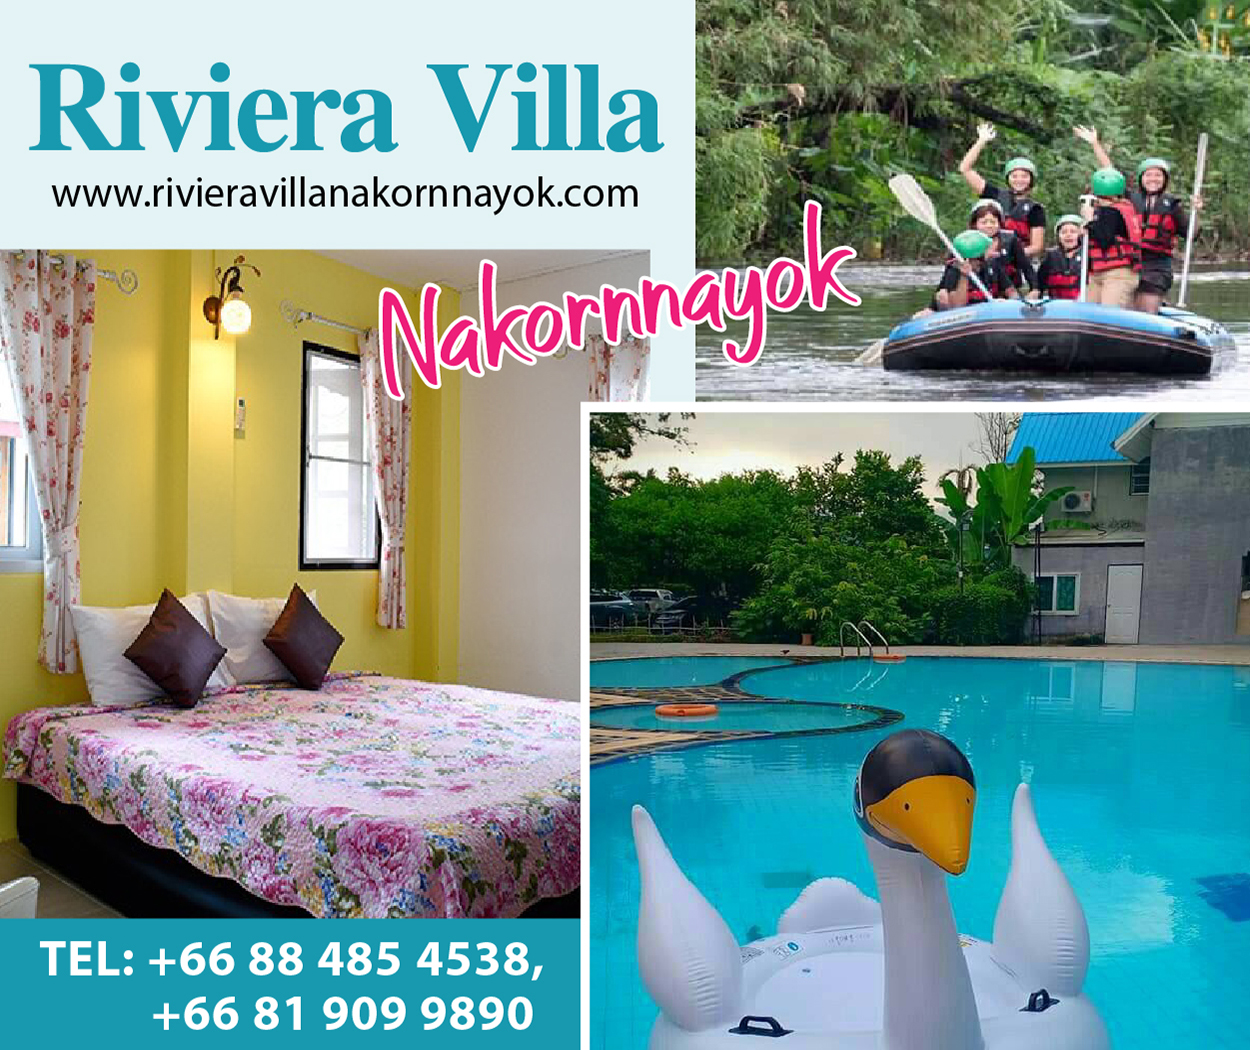 Riviera Villa Resort Nakornnayok